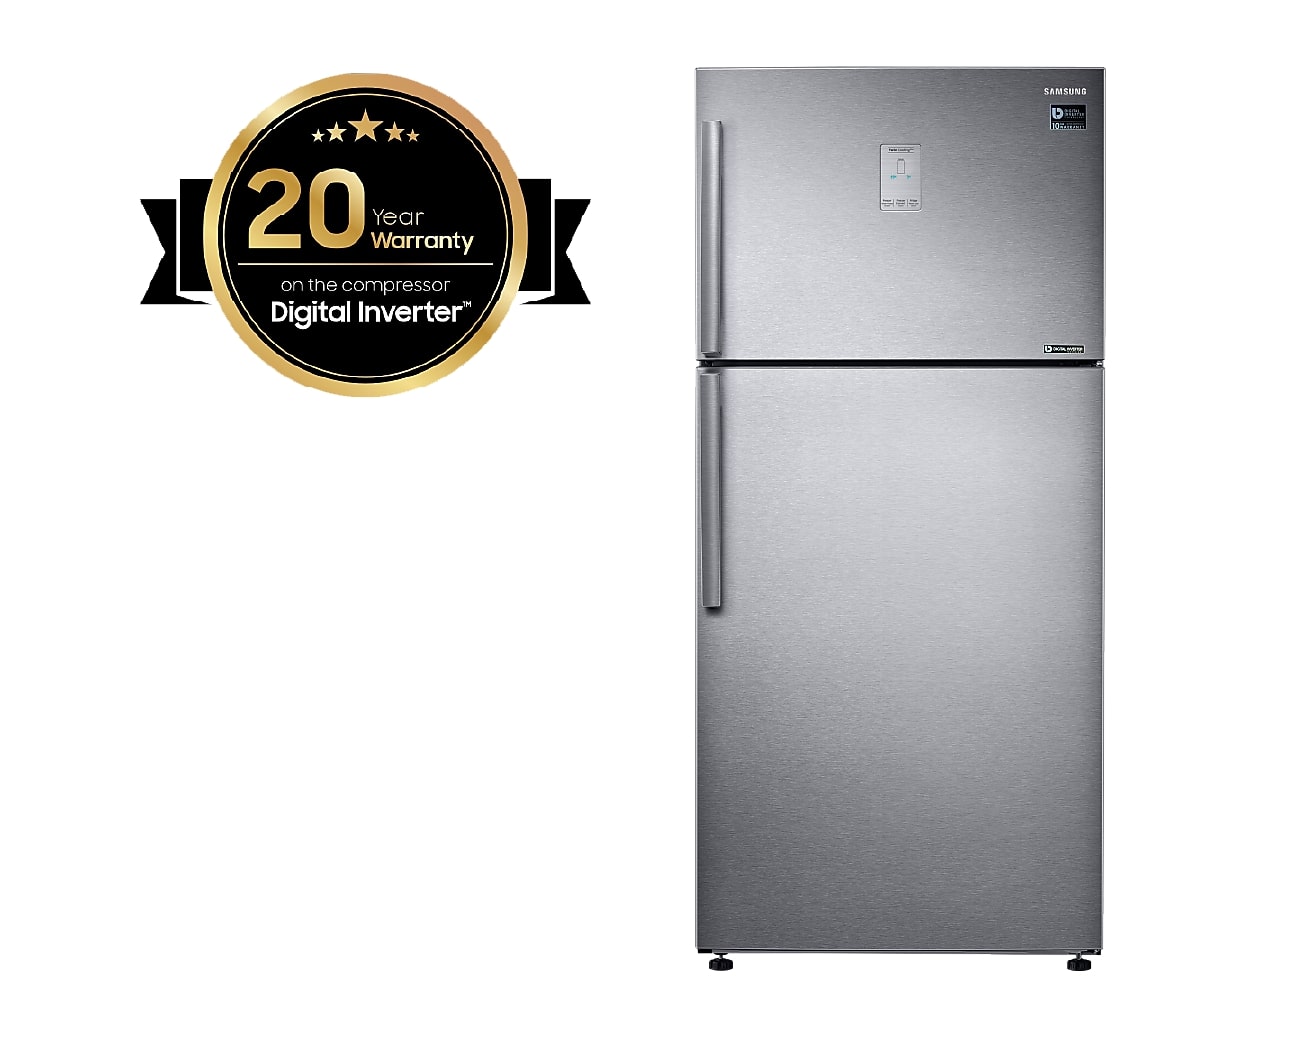 Top-Mount Freezer Refrigerator, 500L Net Capacity